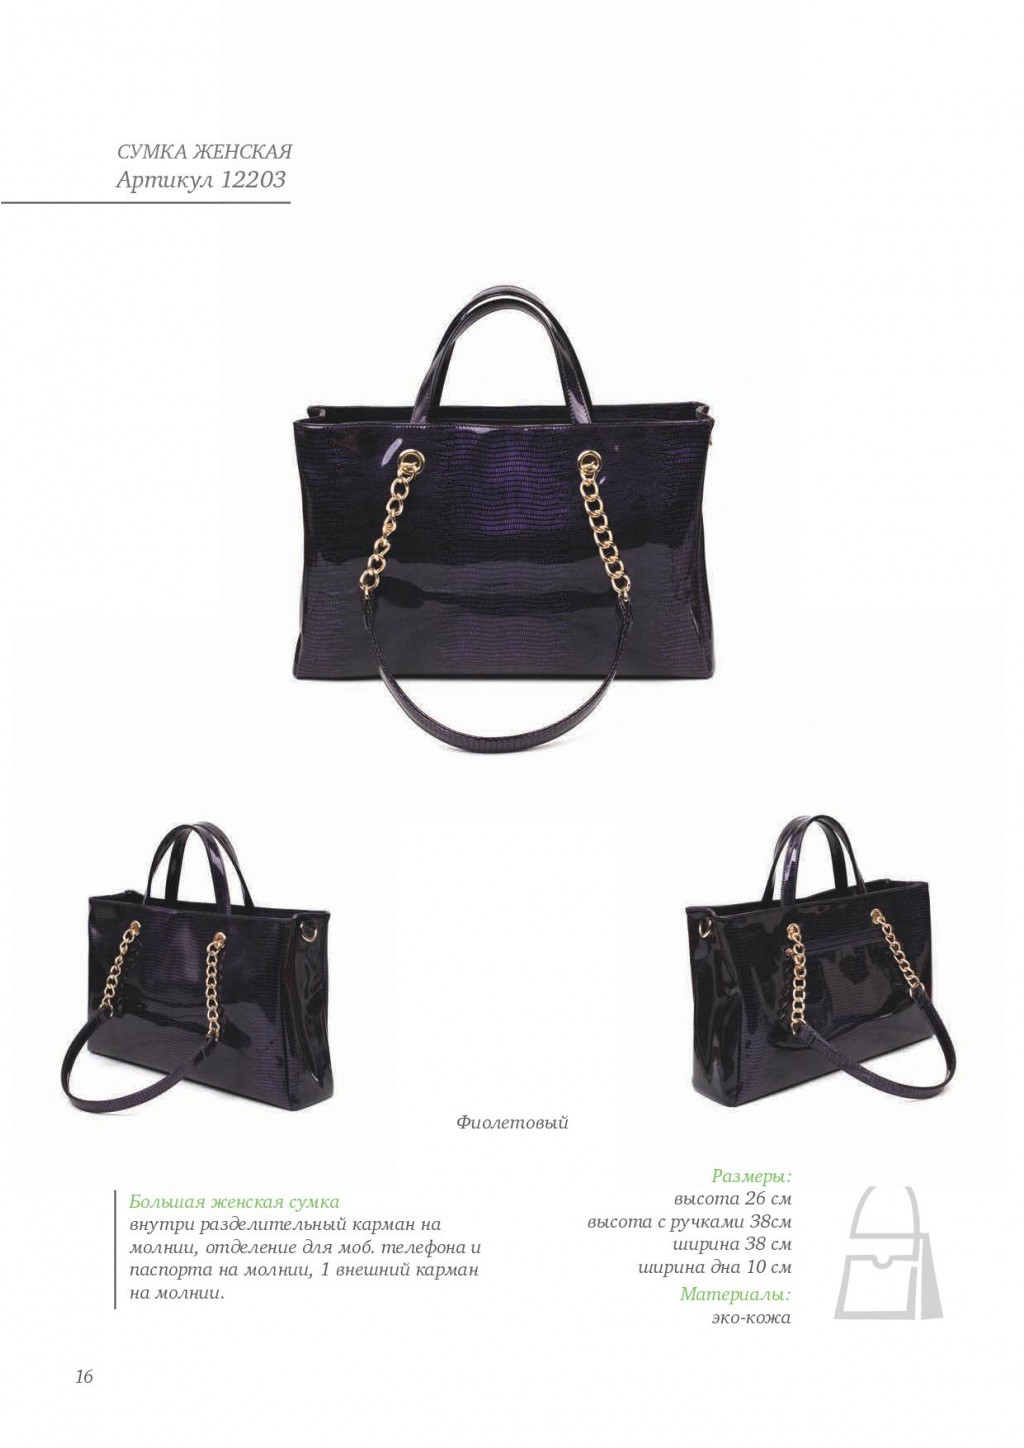 catalog of bags_Sumer2014_WEB-017.jpg